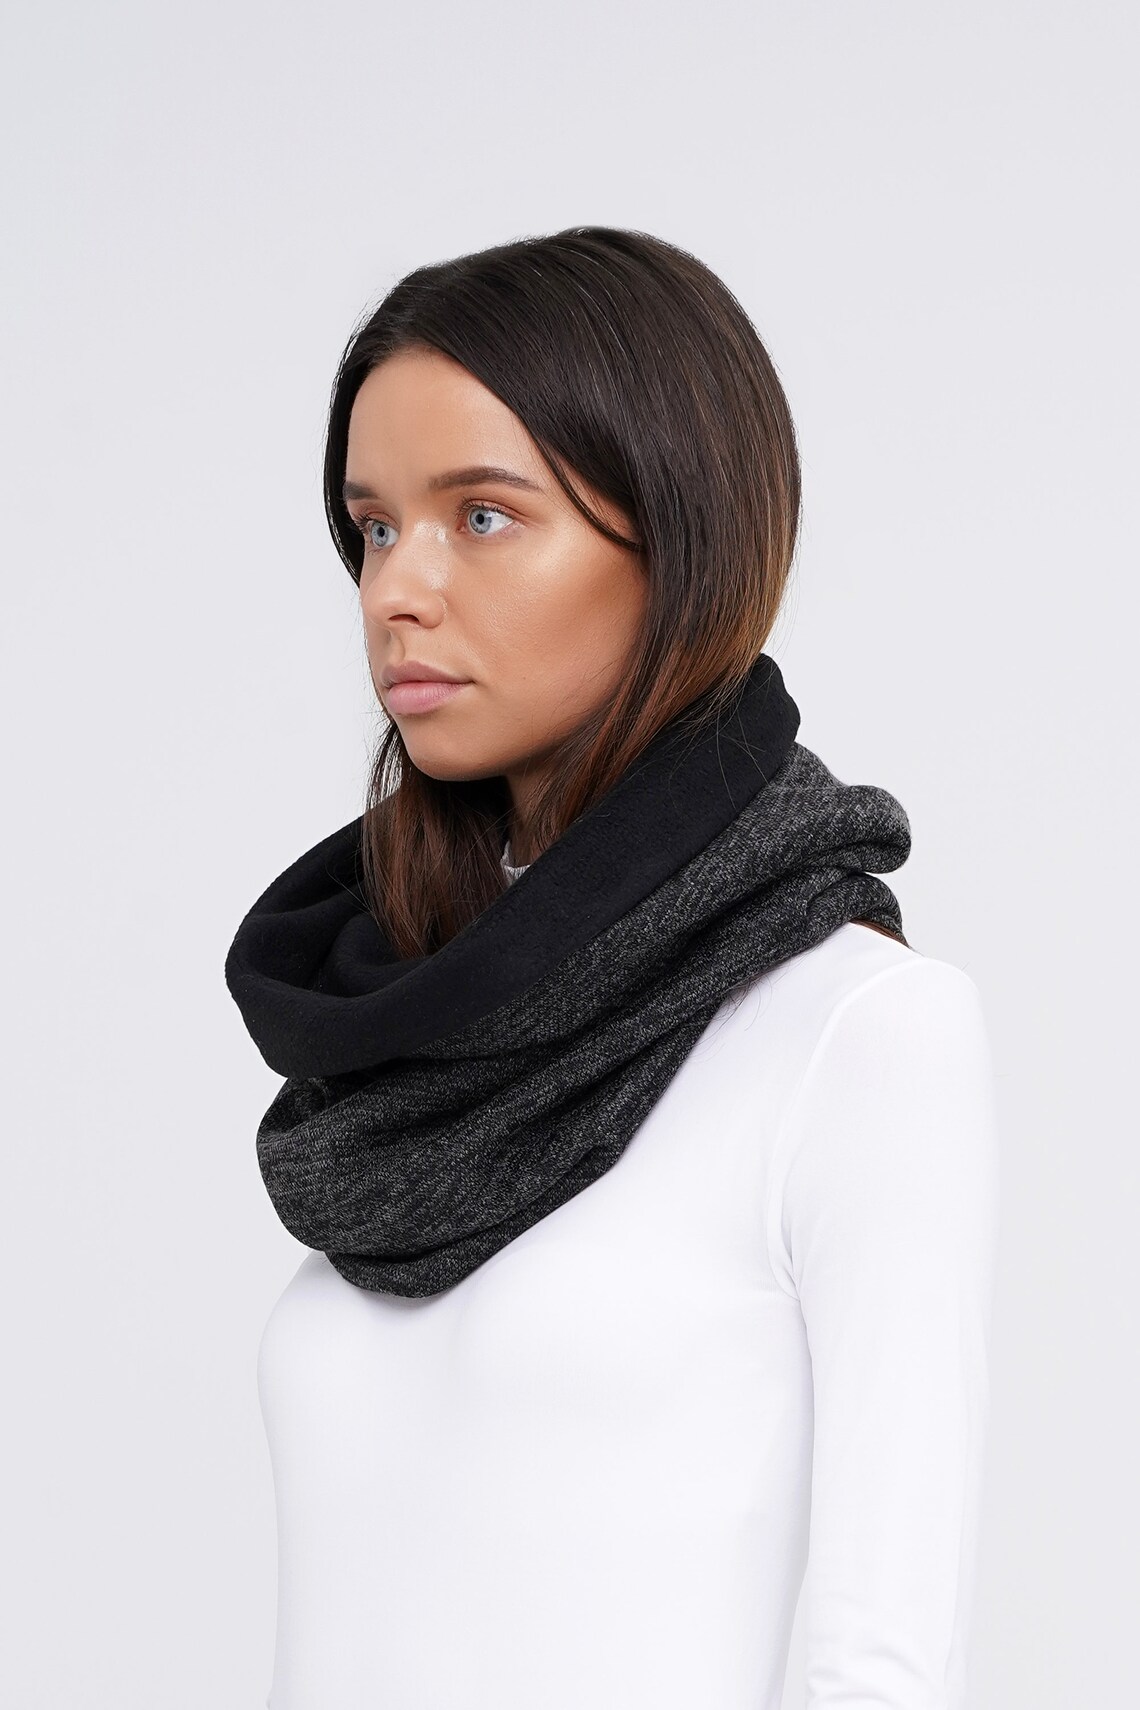 Black hooded scarf Fleece hooded scarf Tube scarf Black fleece | Etsy